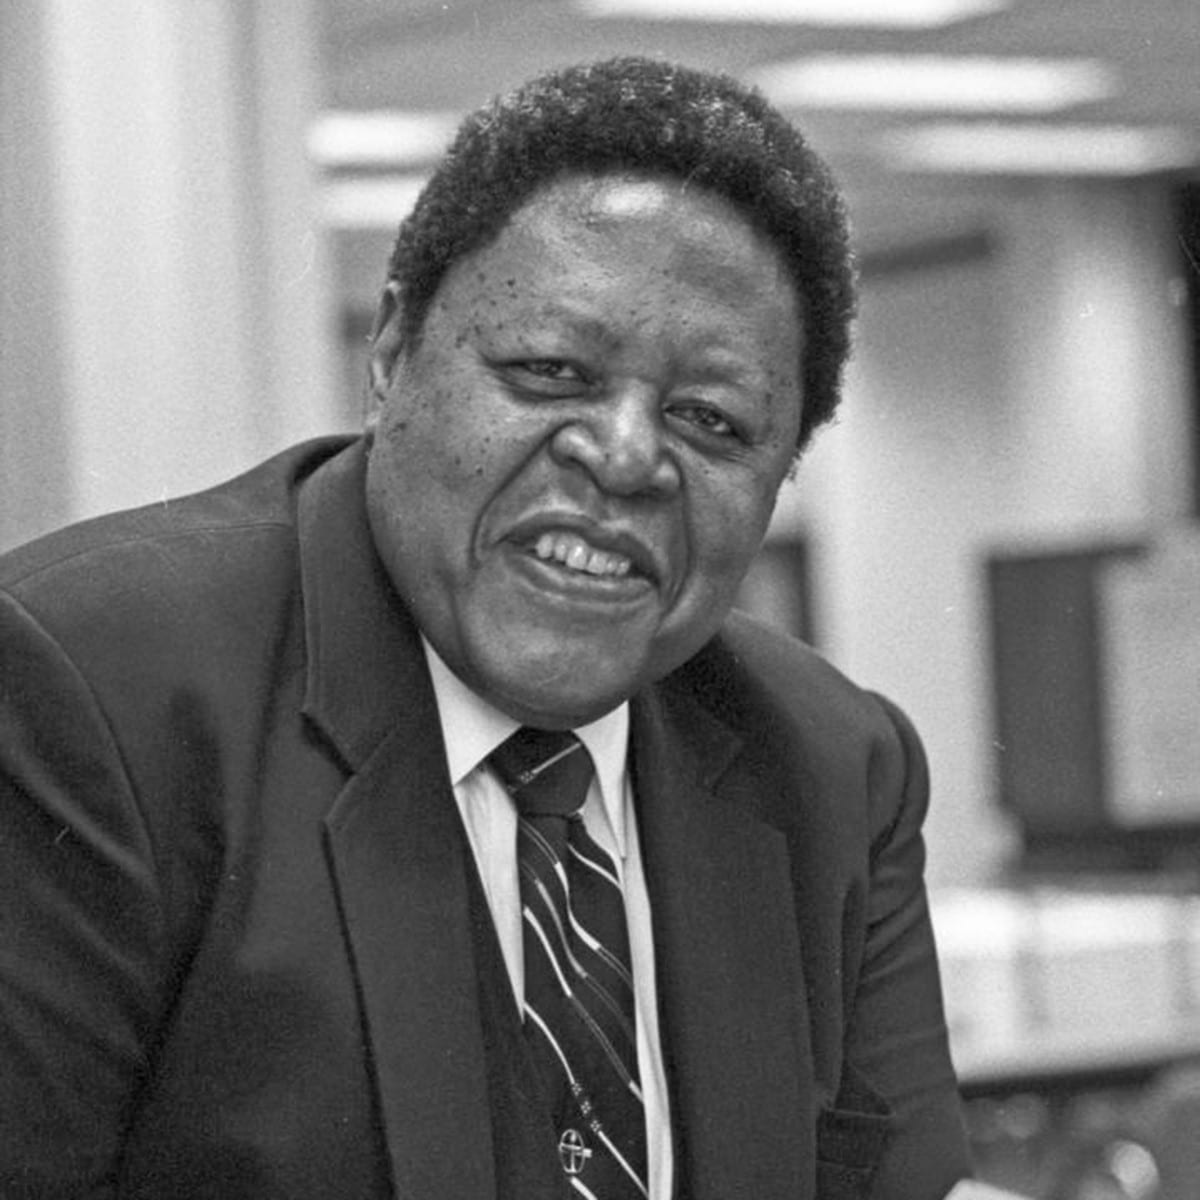 Black and white photo of Philip J. Rutledge, smiling